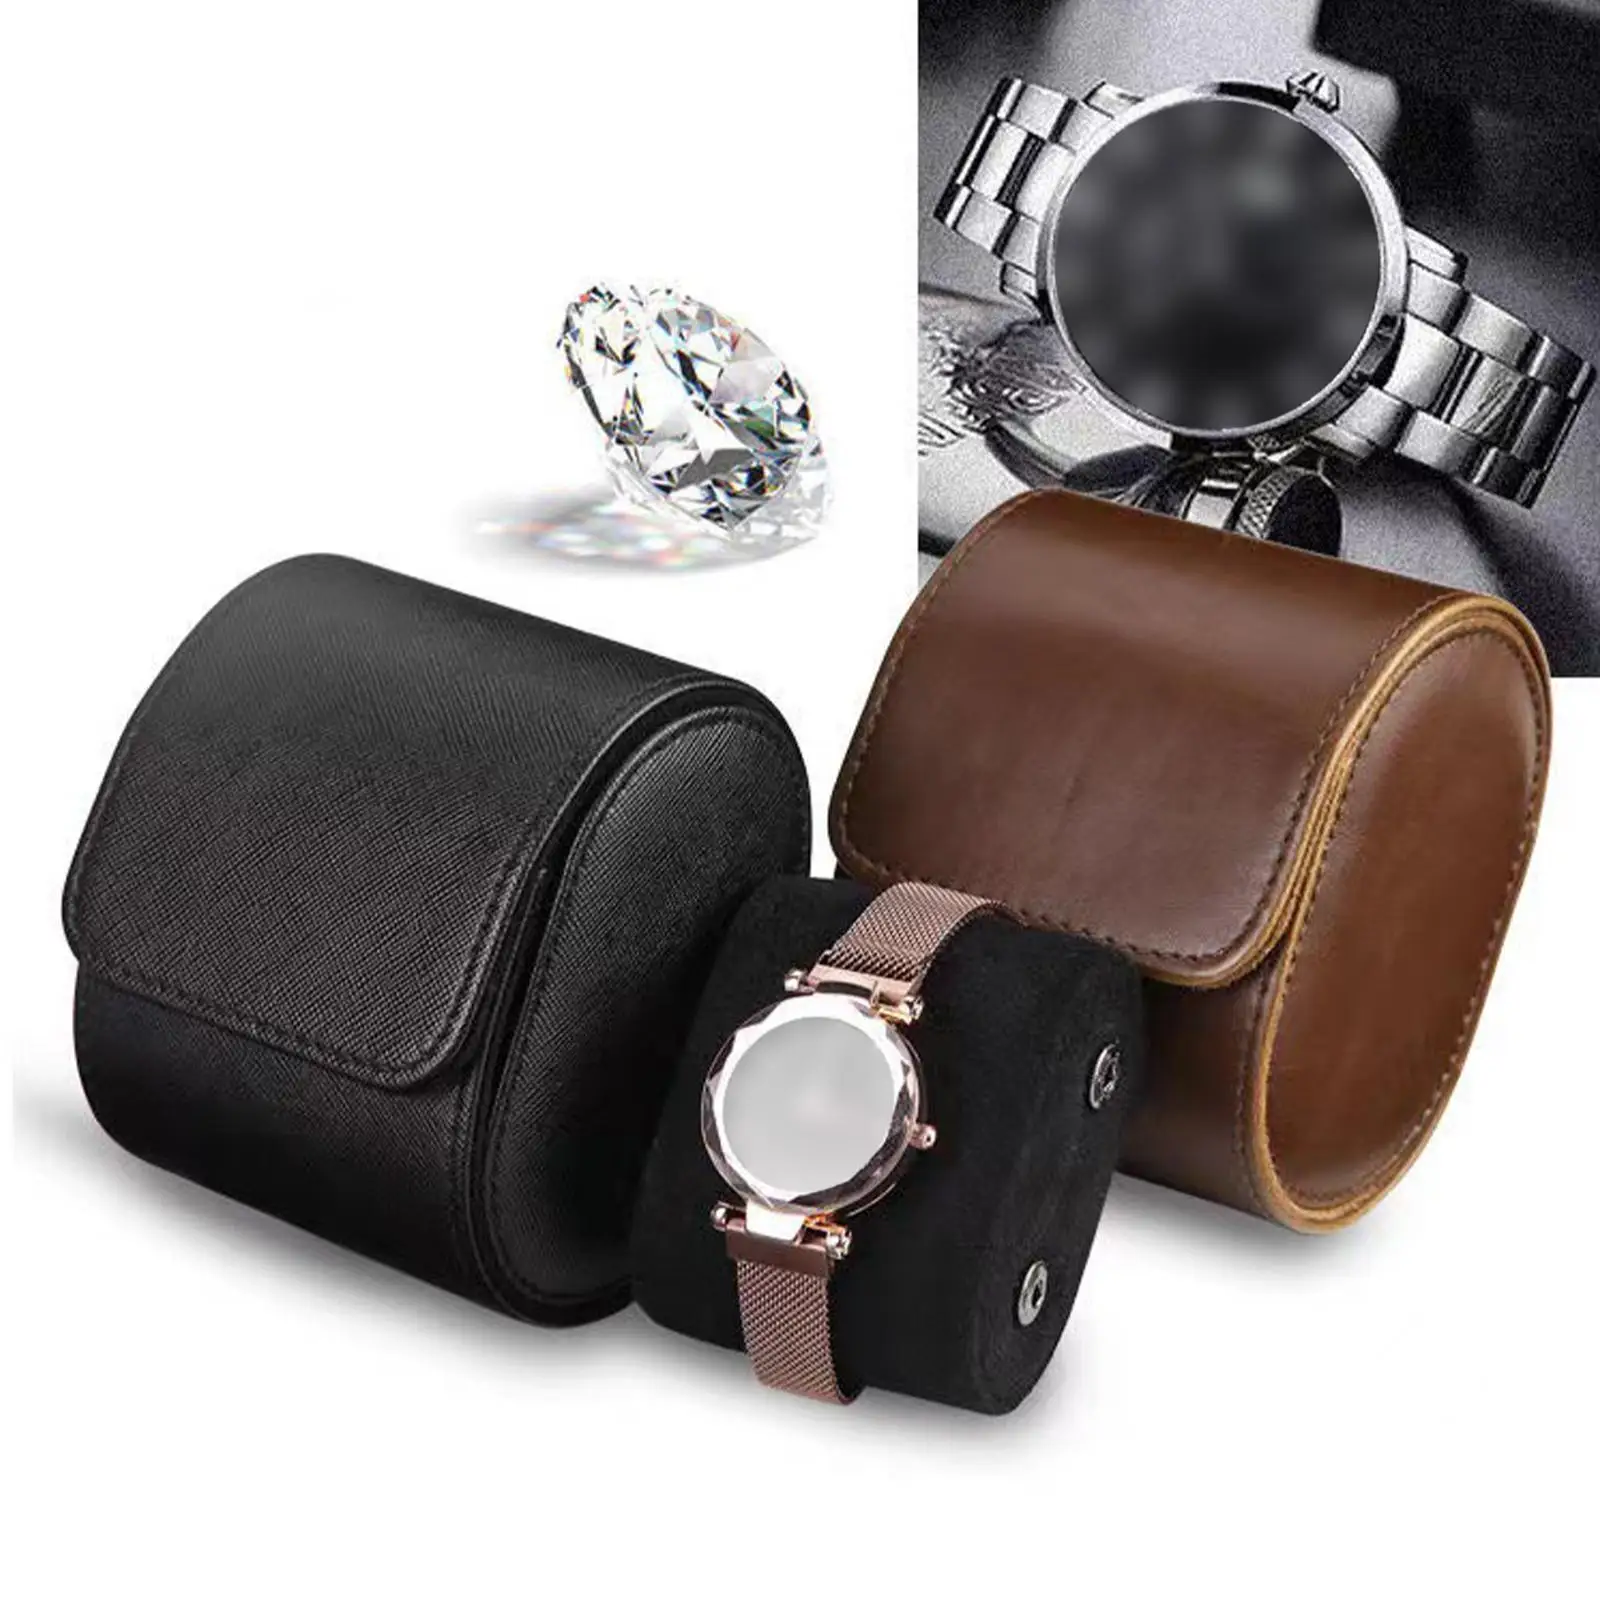 Watch Roll Travel Case Jewelry Storage for Men Women Wristwatch Holder